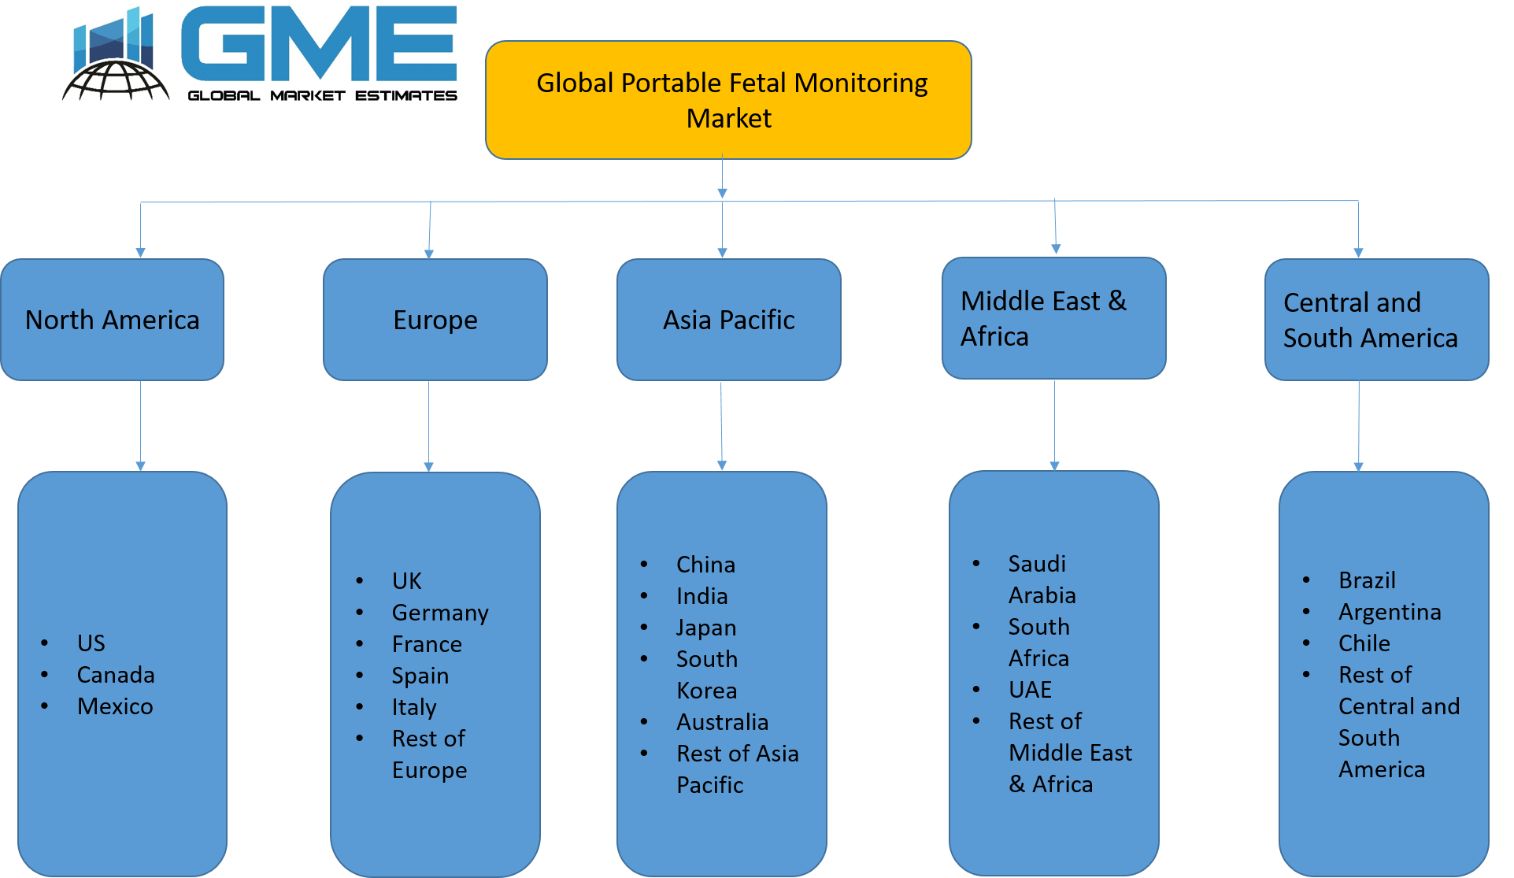 Global Portable Fetal Monitoring Market - Regional Analysis